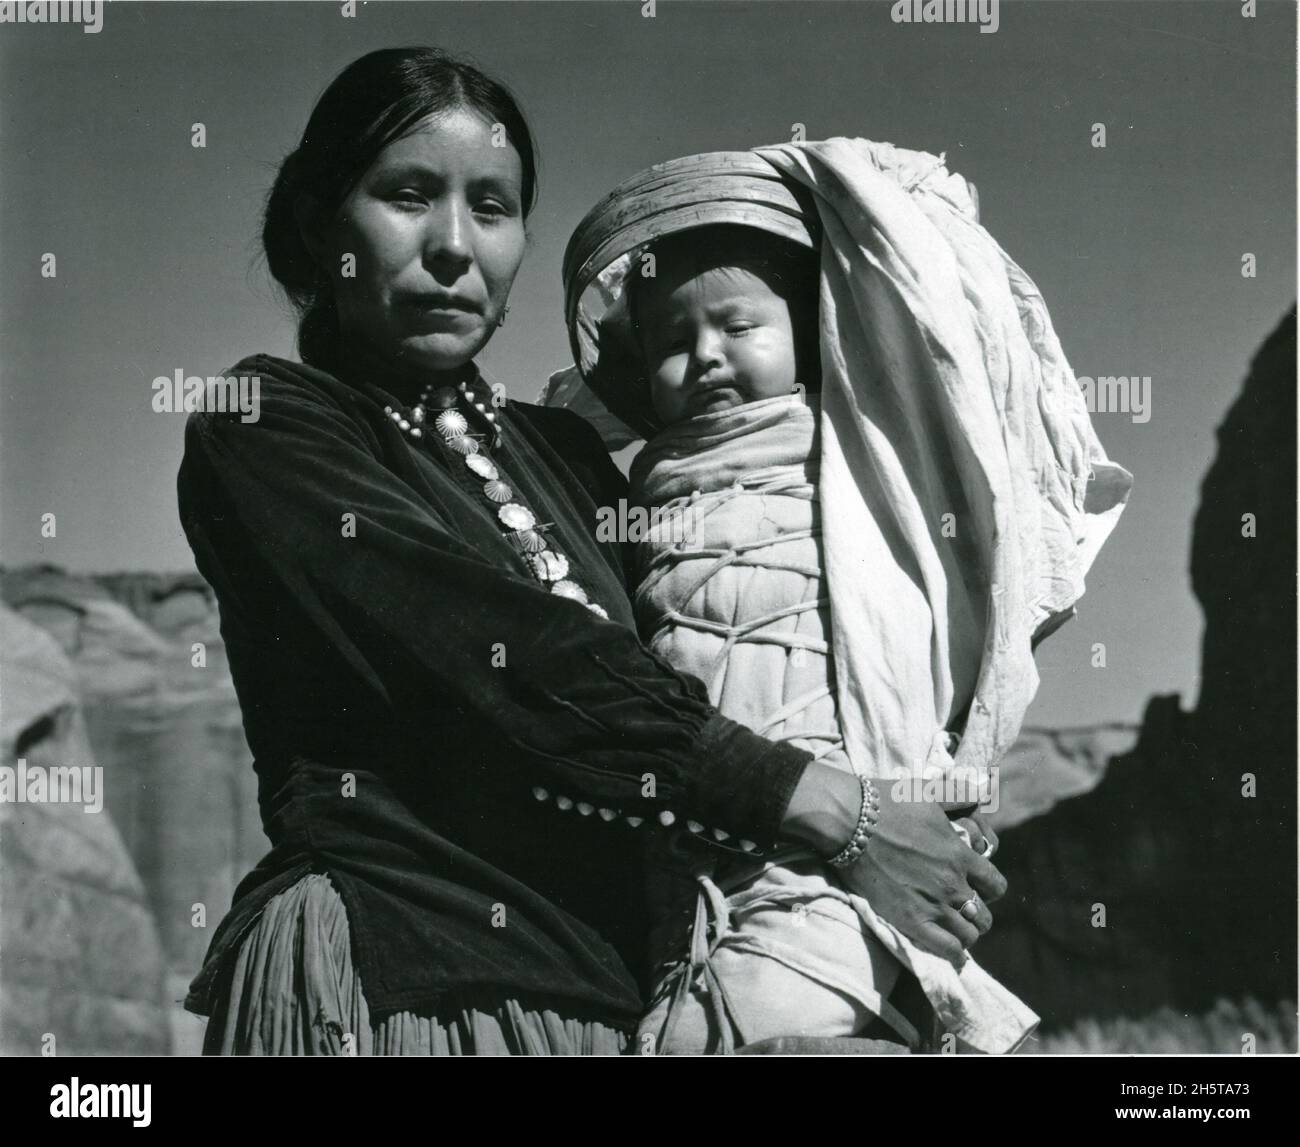 Navajo Frau und Kleinkind. Canyon de Chelly National Monument, Arizona. Etwa 1941. Foto von Ansel Adams/National Park Service Stockfoto